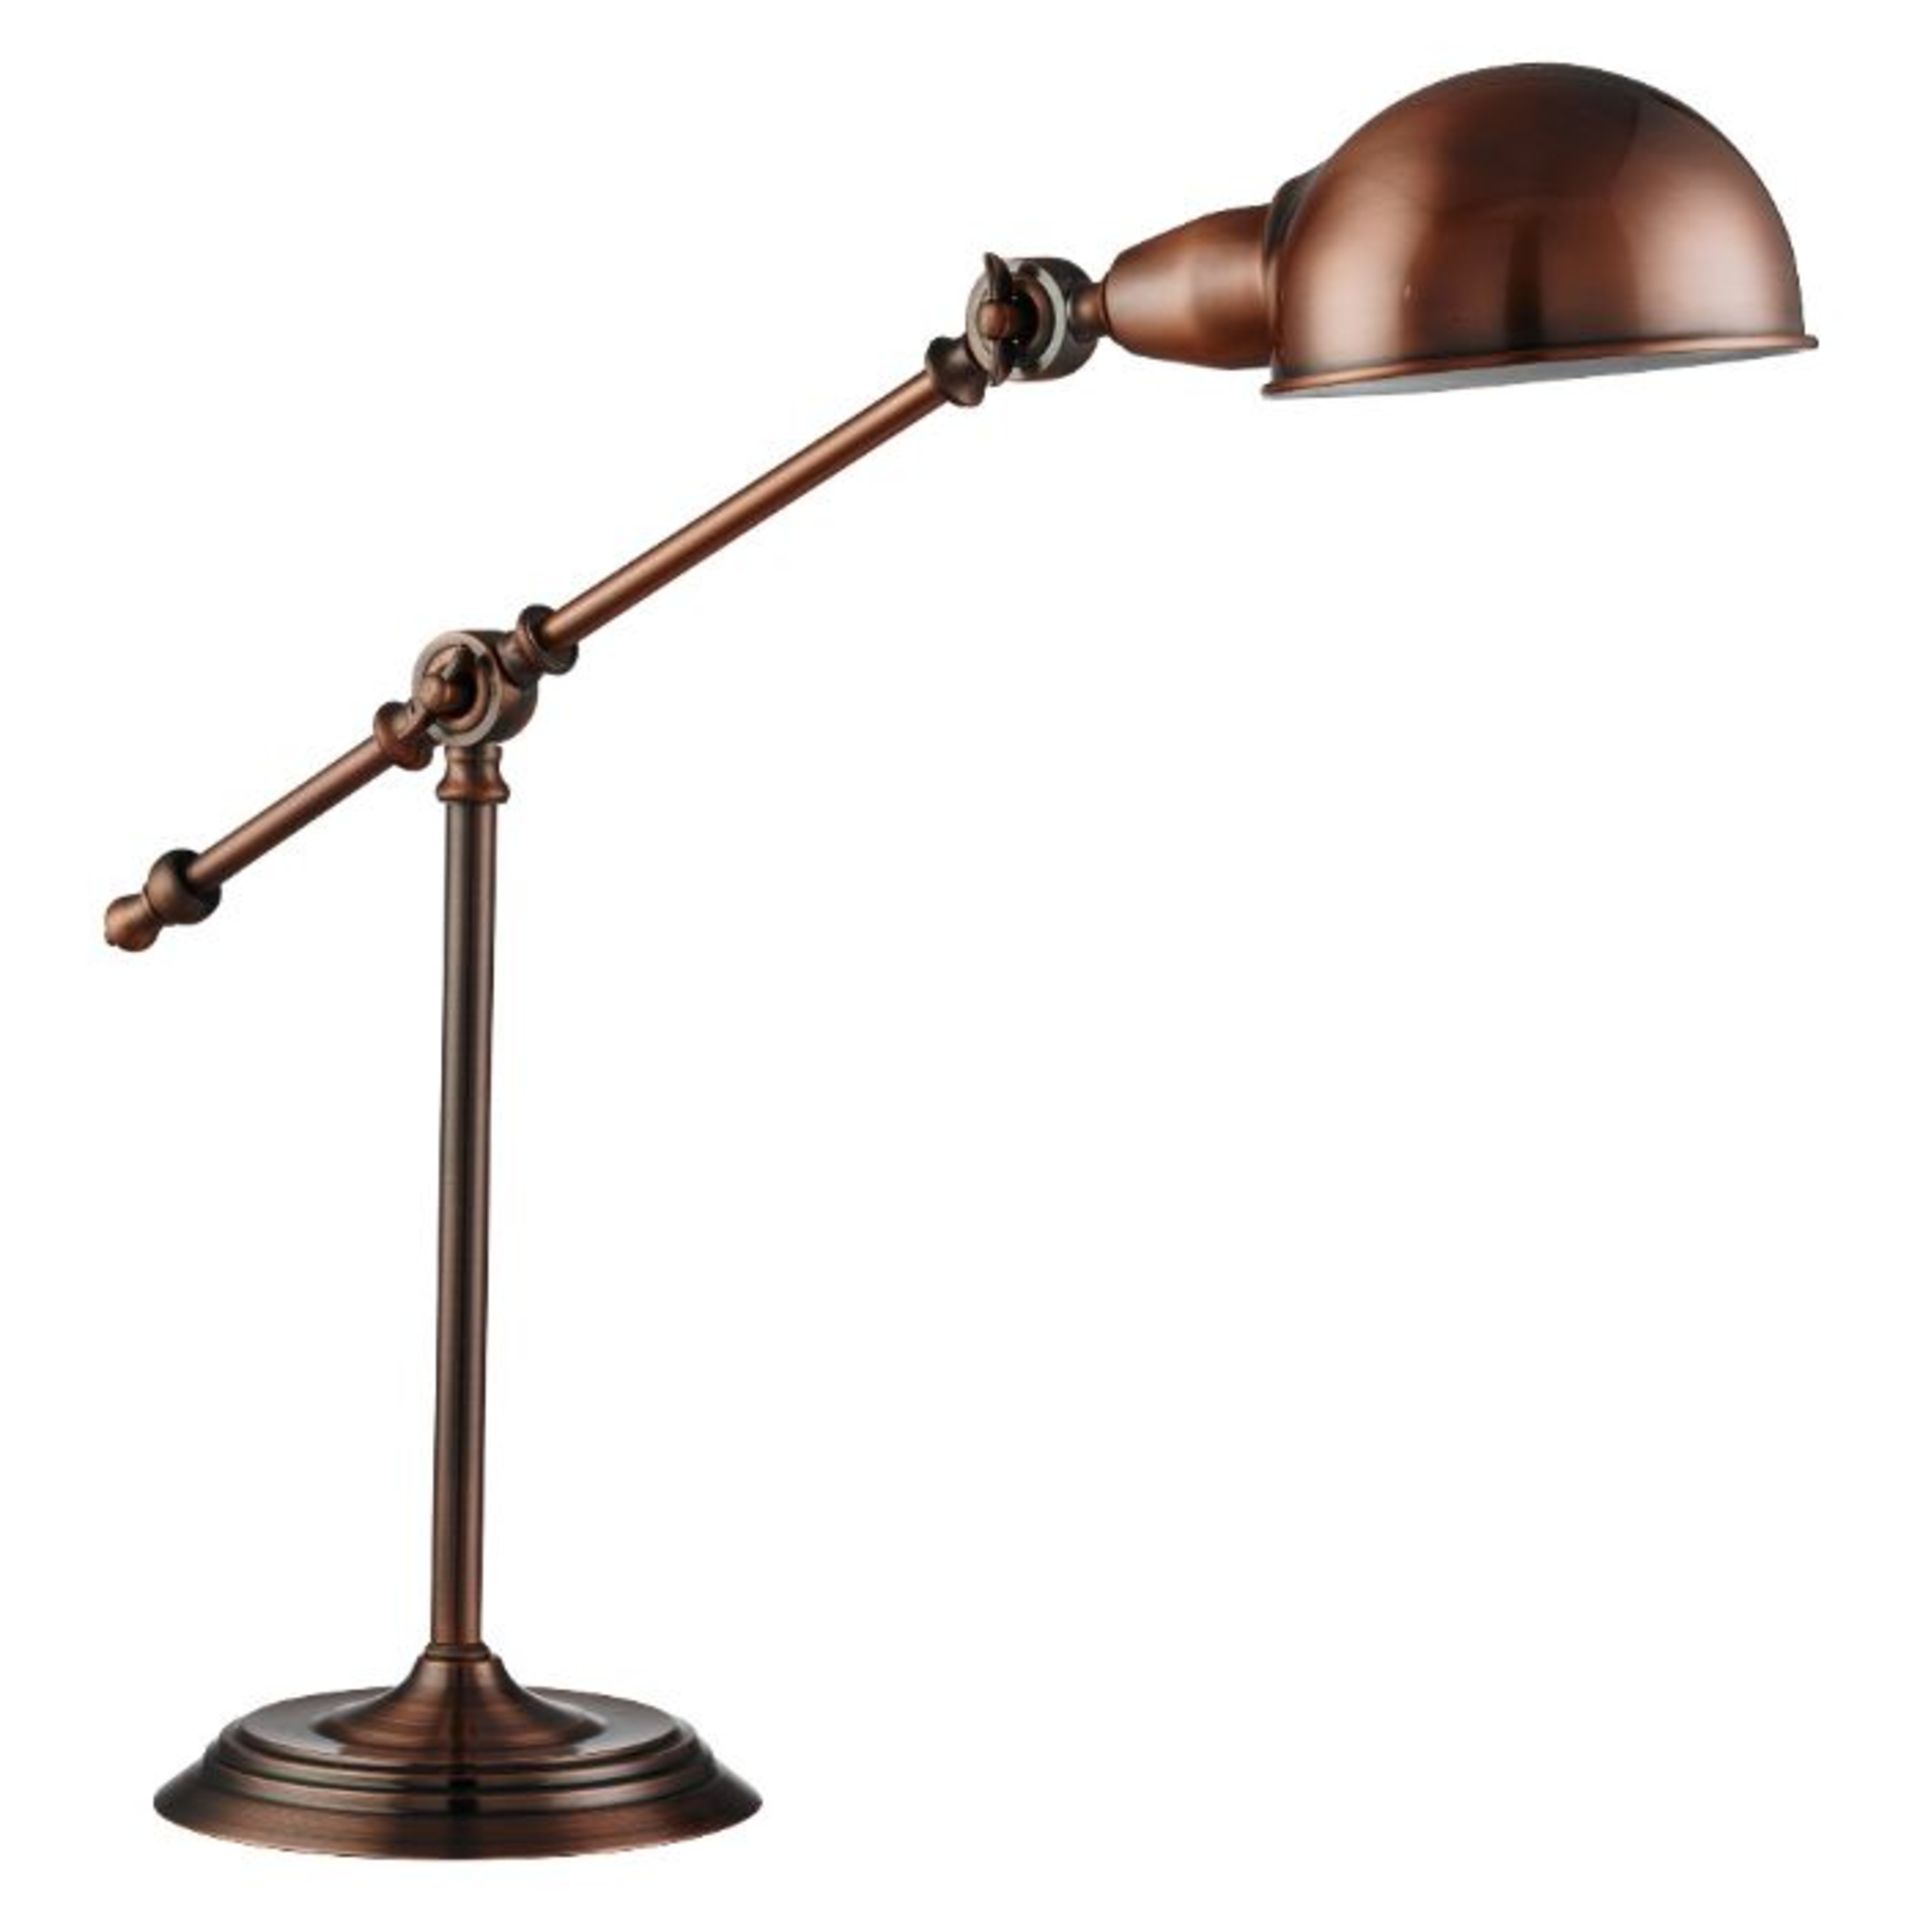 1LT TABLE LAMP ANTIQUE COPPER FINISH - Antique Copper Finish Table Lamp, 350mm Hight, 180mm wide,